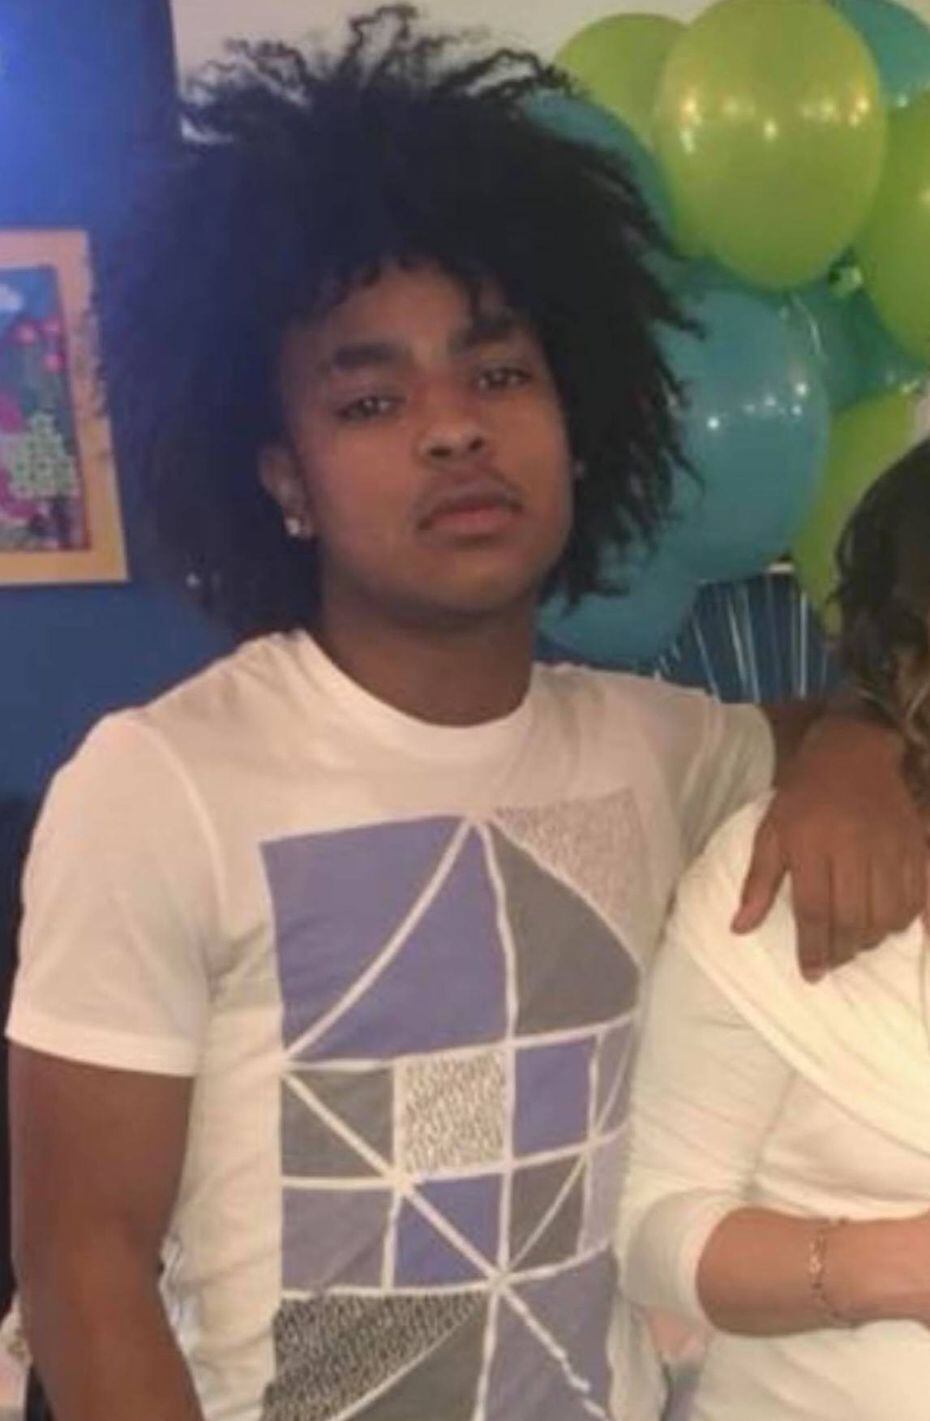 Kenneth Walker, 18, was fatally shot Sept. 19 in Deep Ellum.